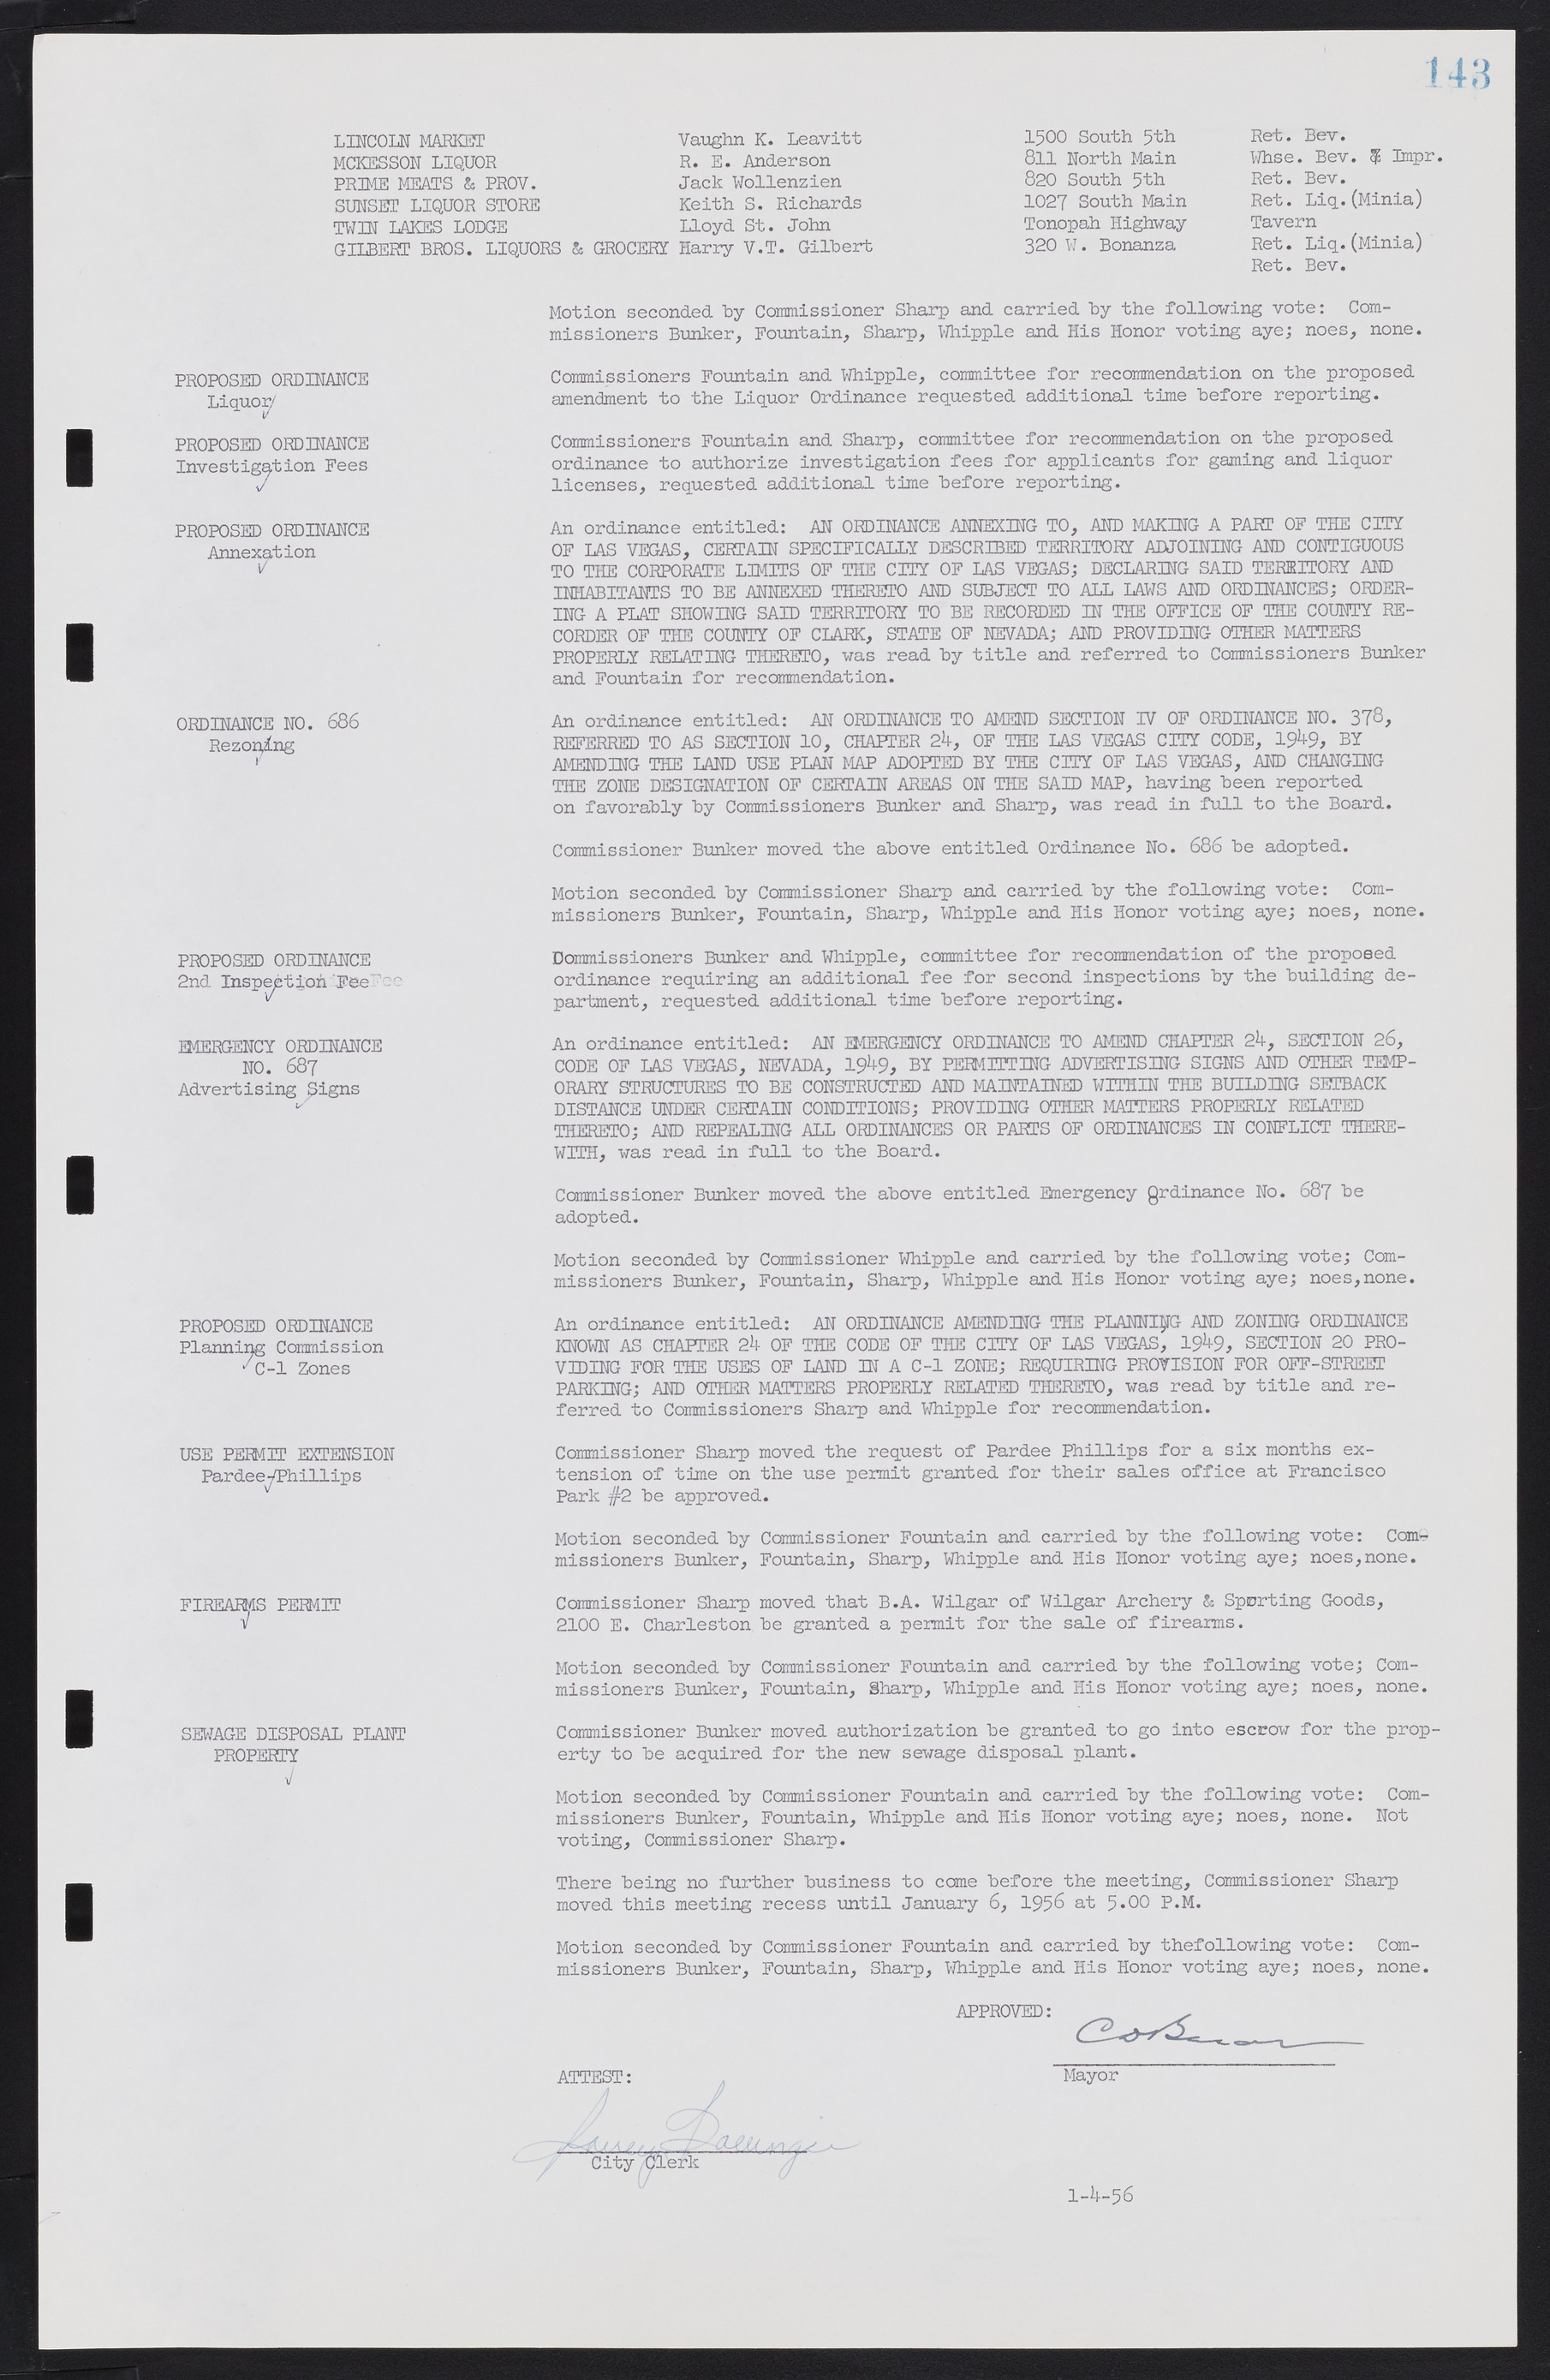 Las Vegas City Commission Minutes, September 21, 1955 to November 20, 1957, lvc000010-153